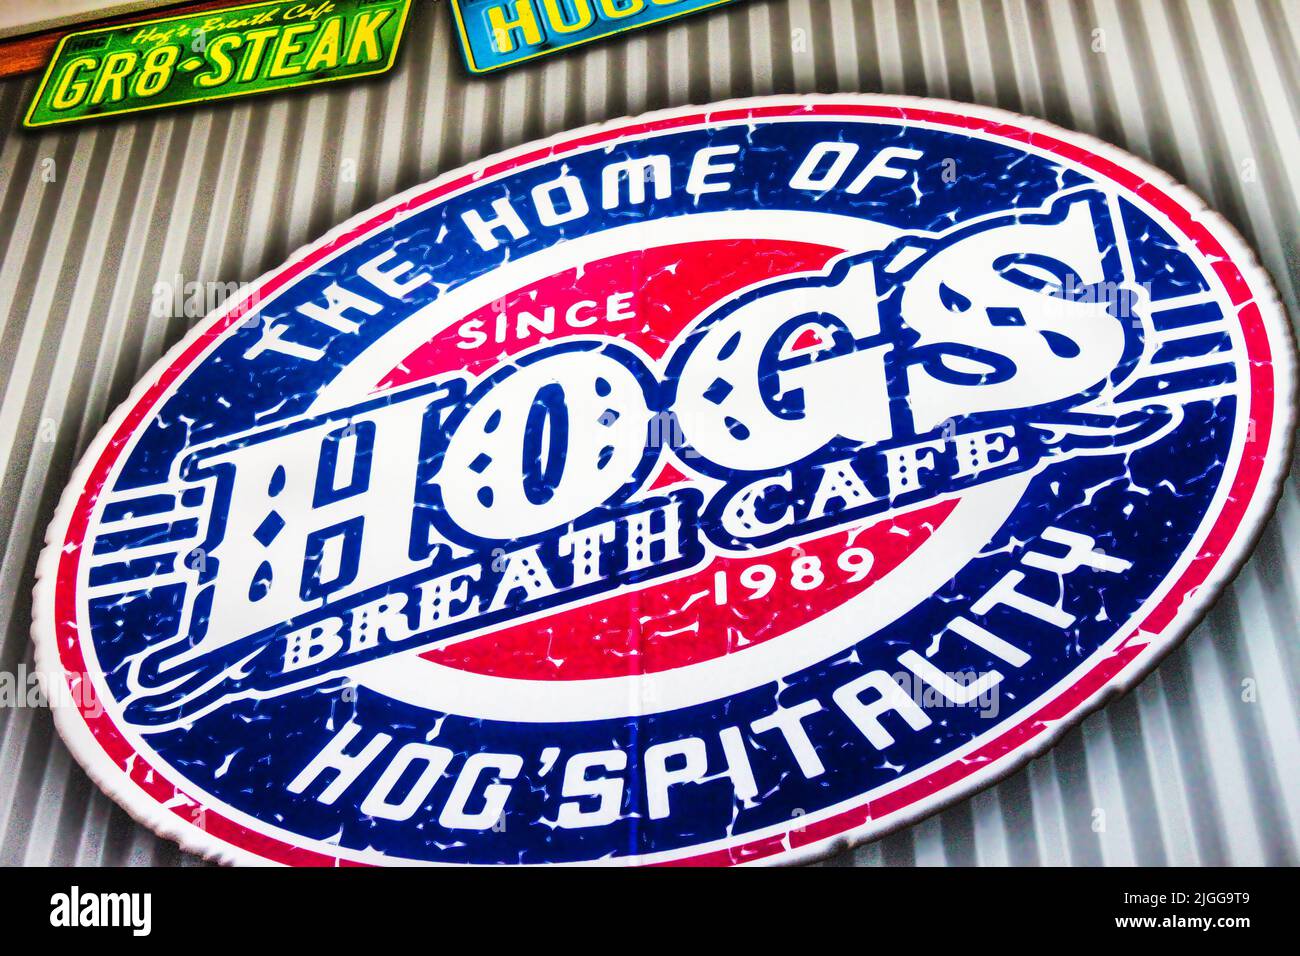 2015-02023 Gold Coast Australia Oval sign for Hogs Breath Cafe on corregated steel wall -Closeup Stock Photo